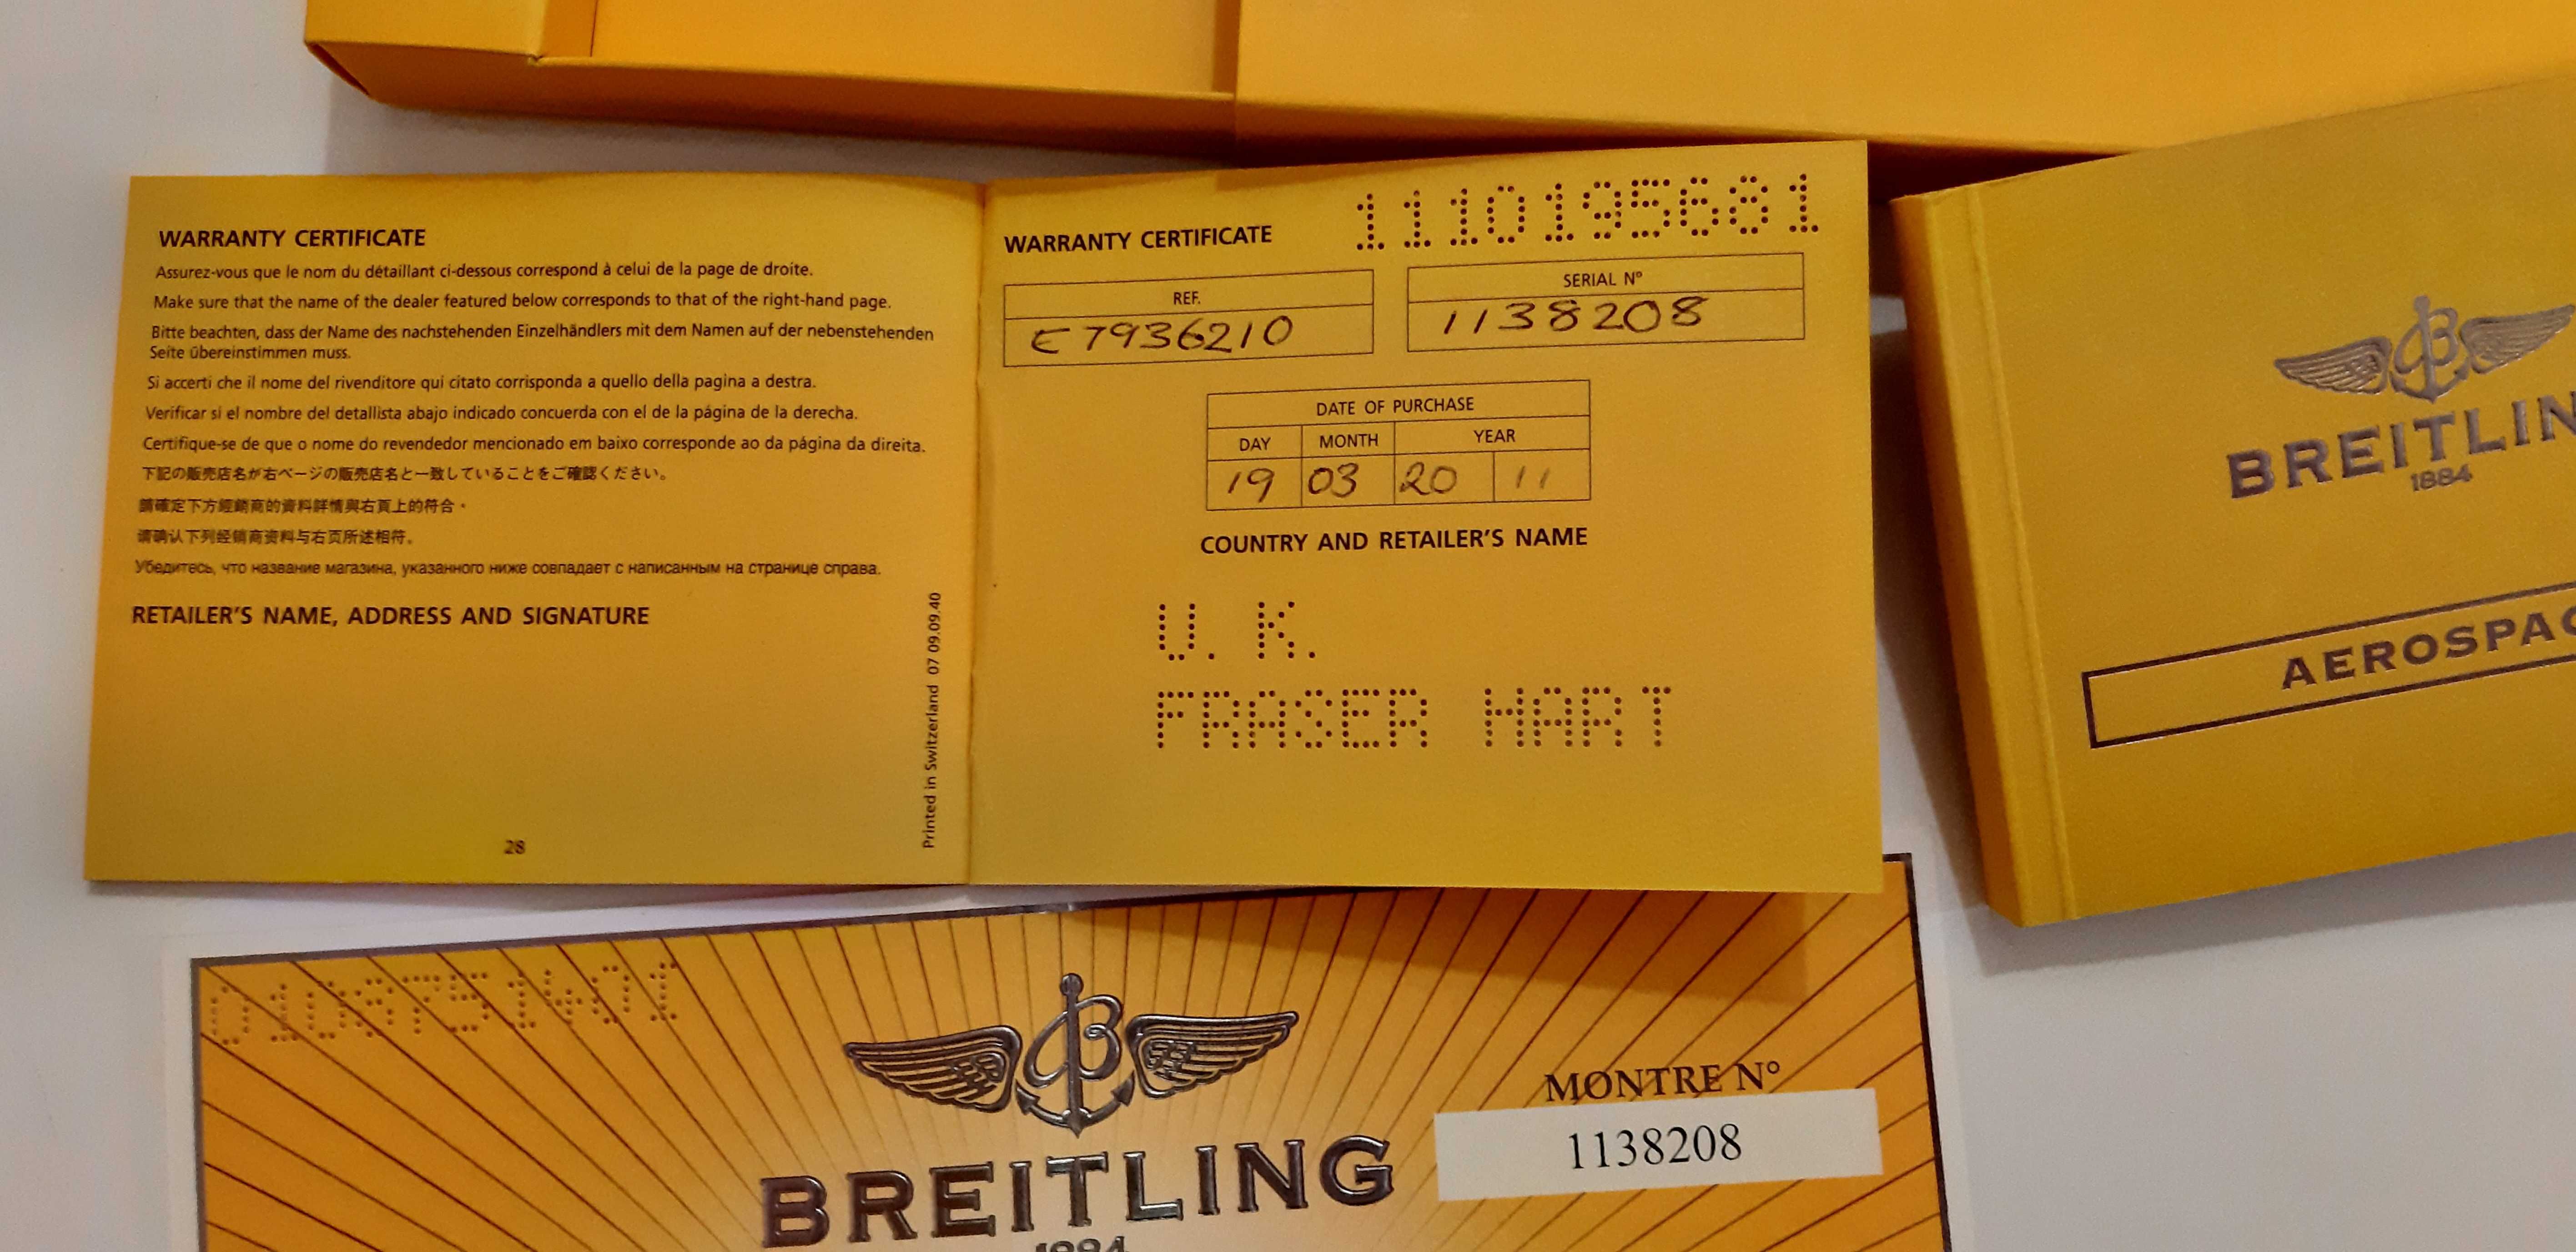 Breitling Aerospace Avantage E7936210